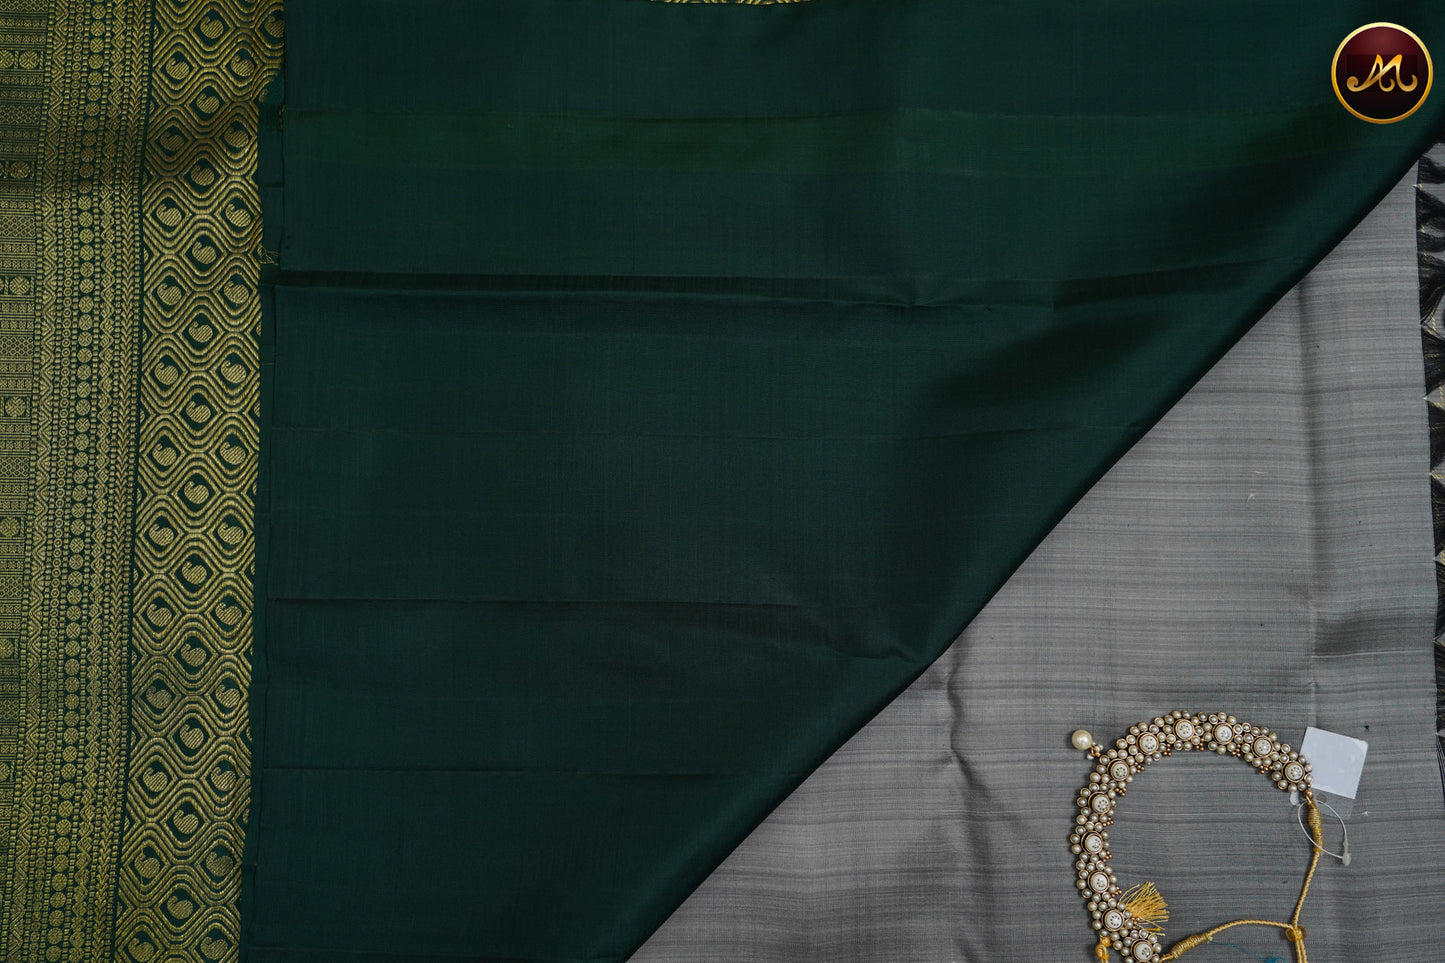 Kanchivaram Handloom Pure Silk in Checks pattern in Grey  And Bottle Green combination with Gold Zari  Border and Rich Pallu